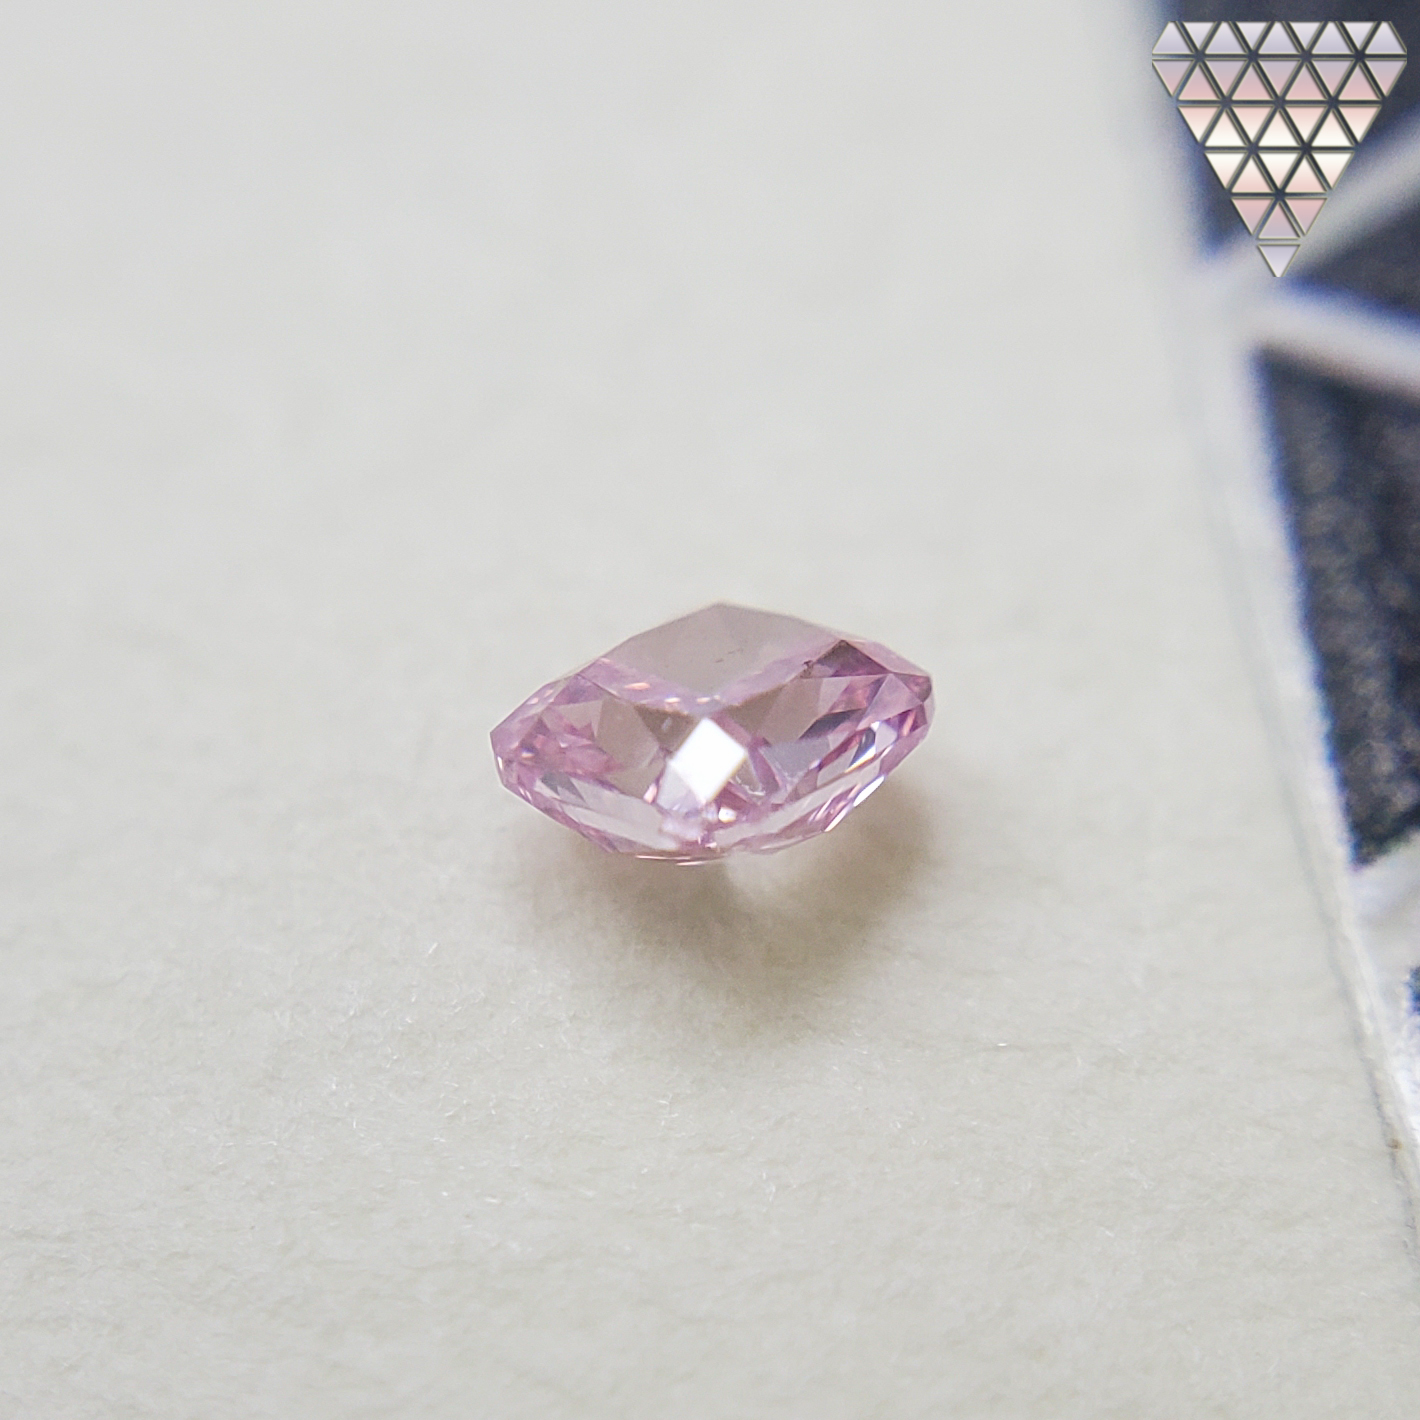 0.1 Carat, Fancy Intense Purplish Pink Natural Diamond, Radiant Shape, VS1 ± Clarity, GIA 3